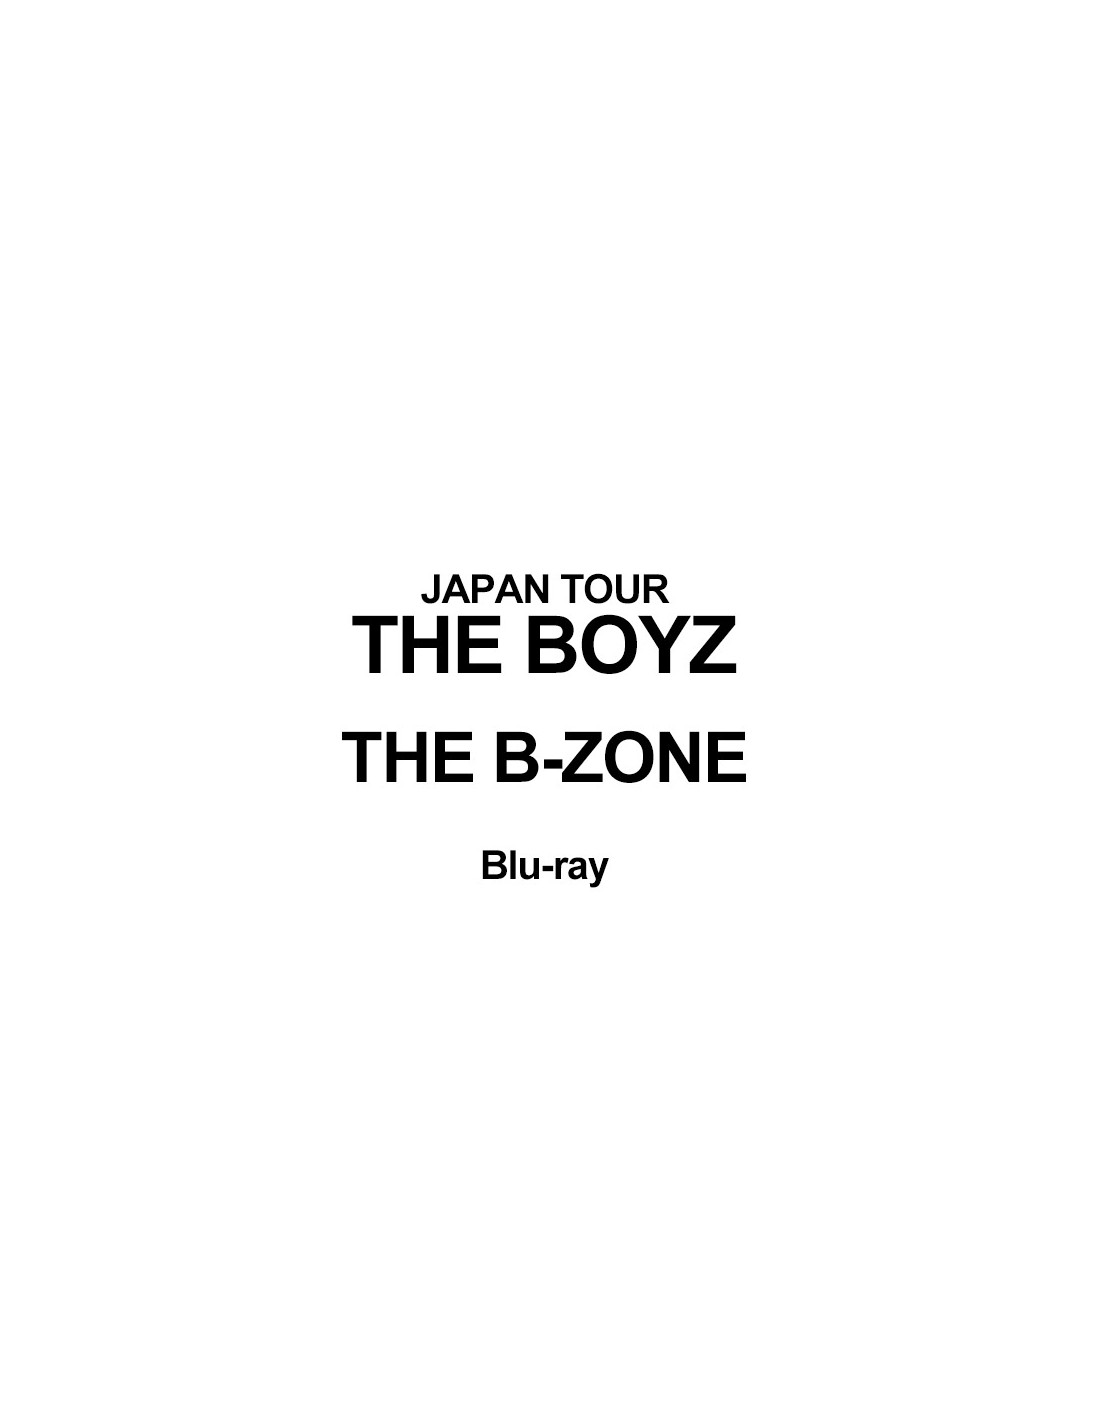 Japanese Edition] THE BOYZ JAPAN TOUR: THE B-ZONE Blu-ray